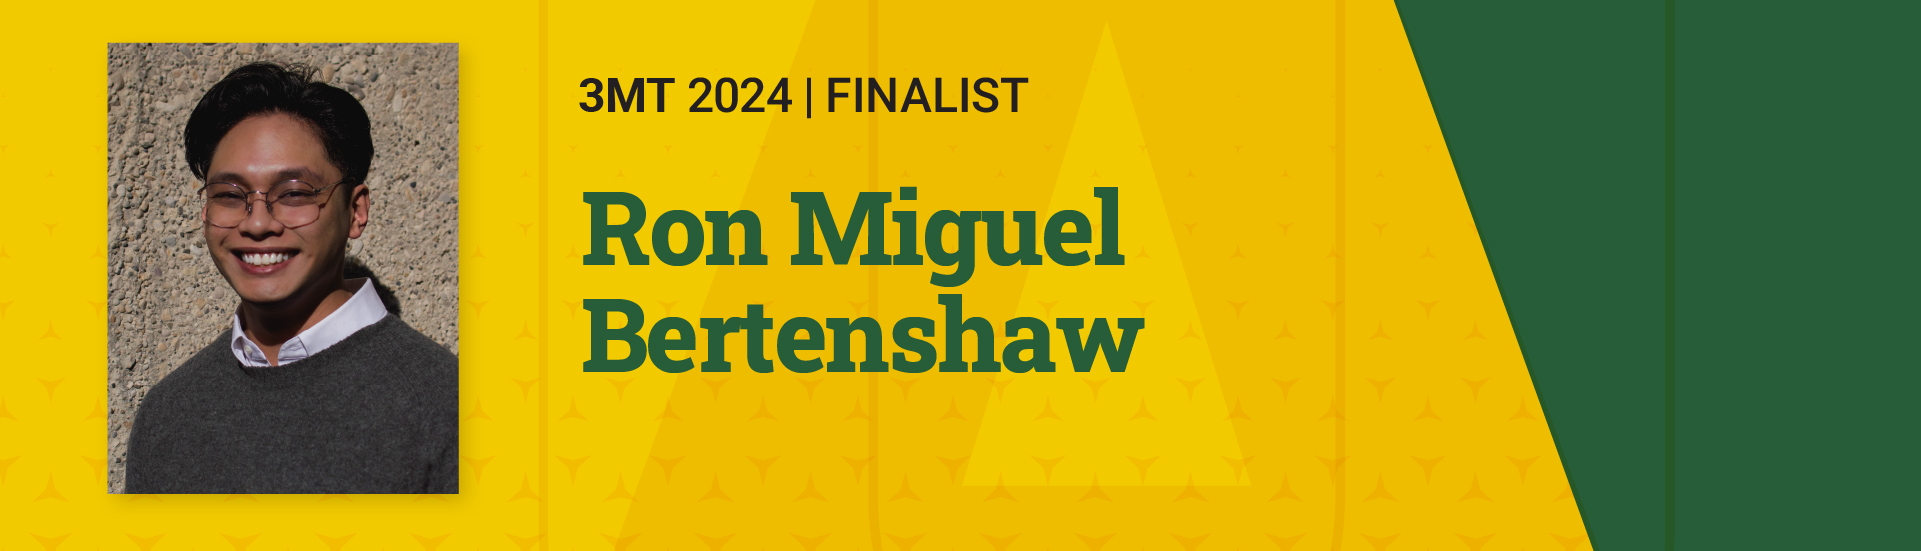 3MT 2024 Finalist Ron Miguel Bertenshaw